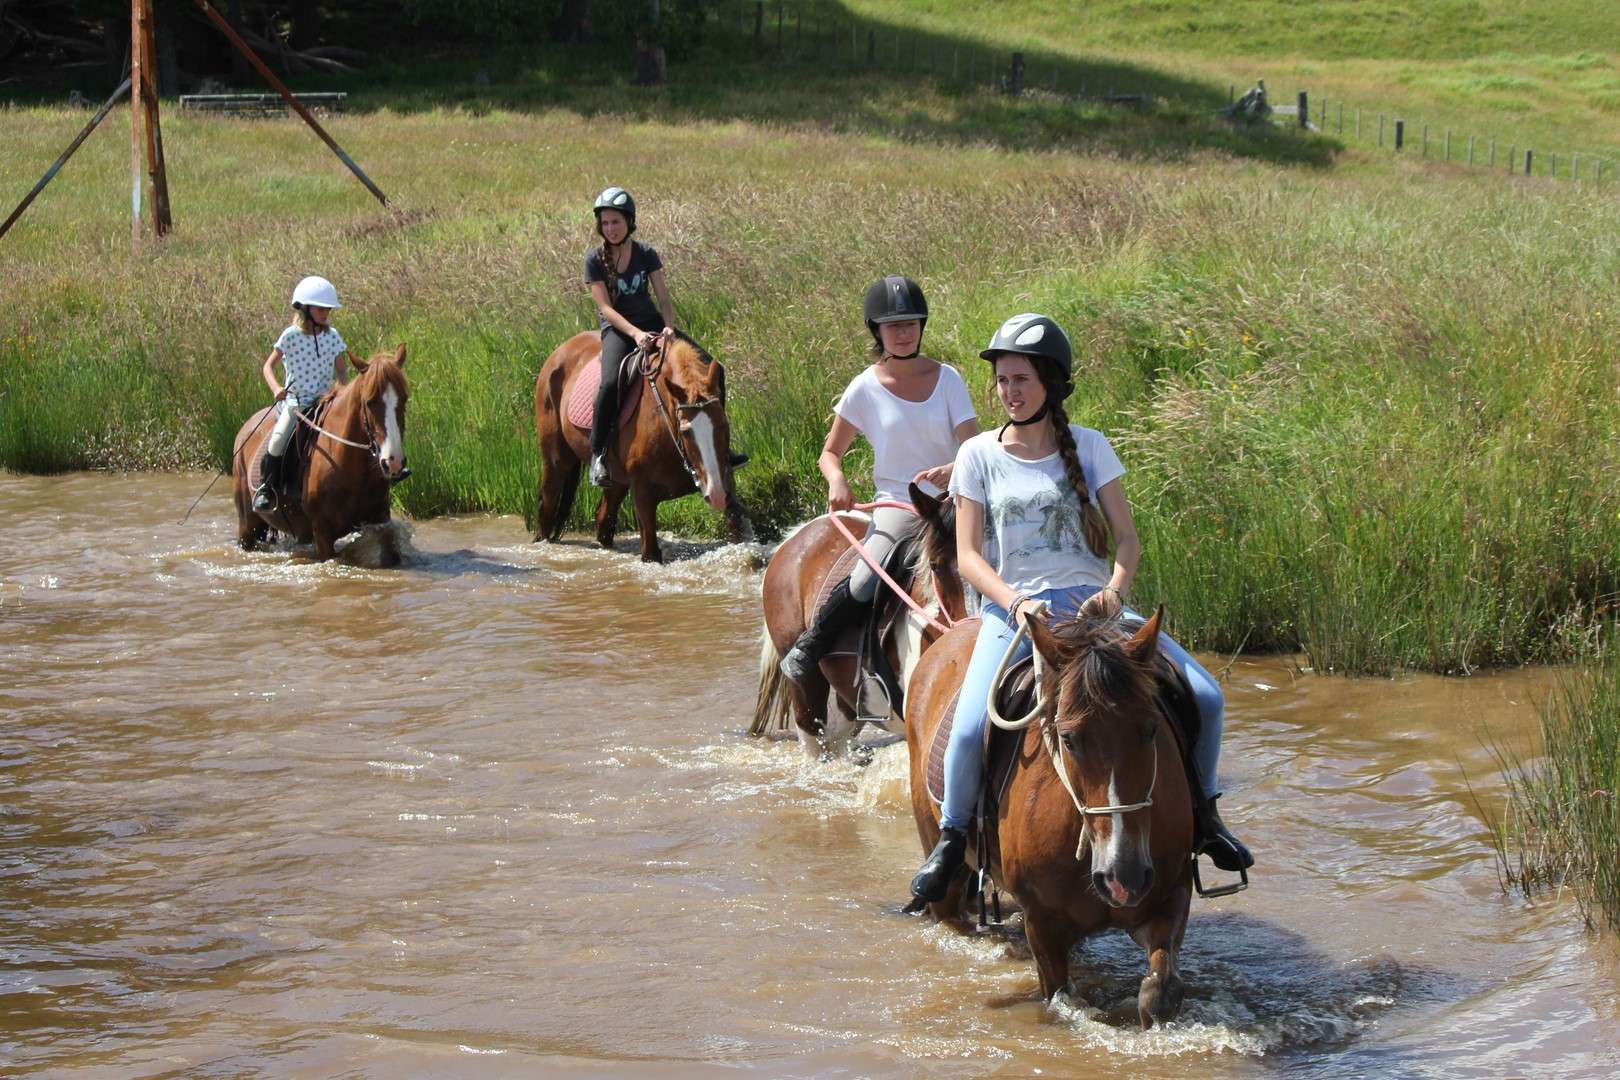 Horse Riding Activities with Kates Horse Riding Treks Kerikeri